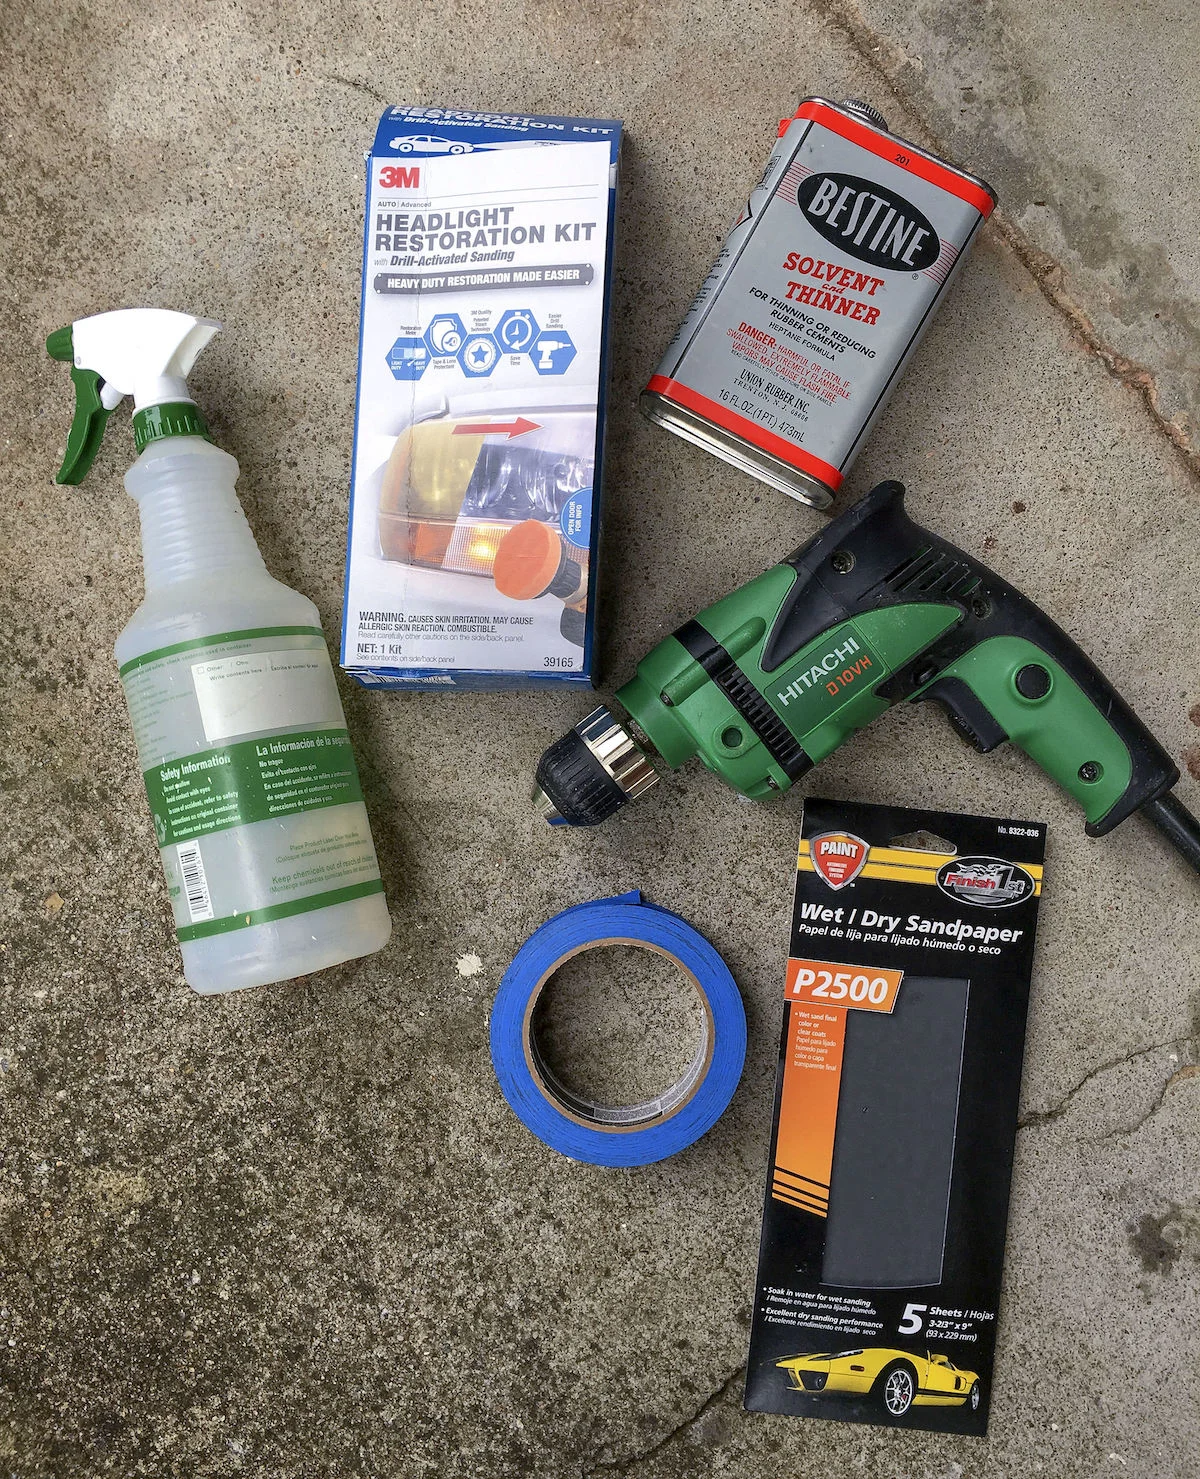 3M headlight restoration kit, Bestine Solvent and thinner, Hitachi drill, wet/dry sandpaper, painter's tape, and a spray bottle